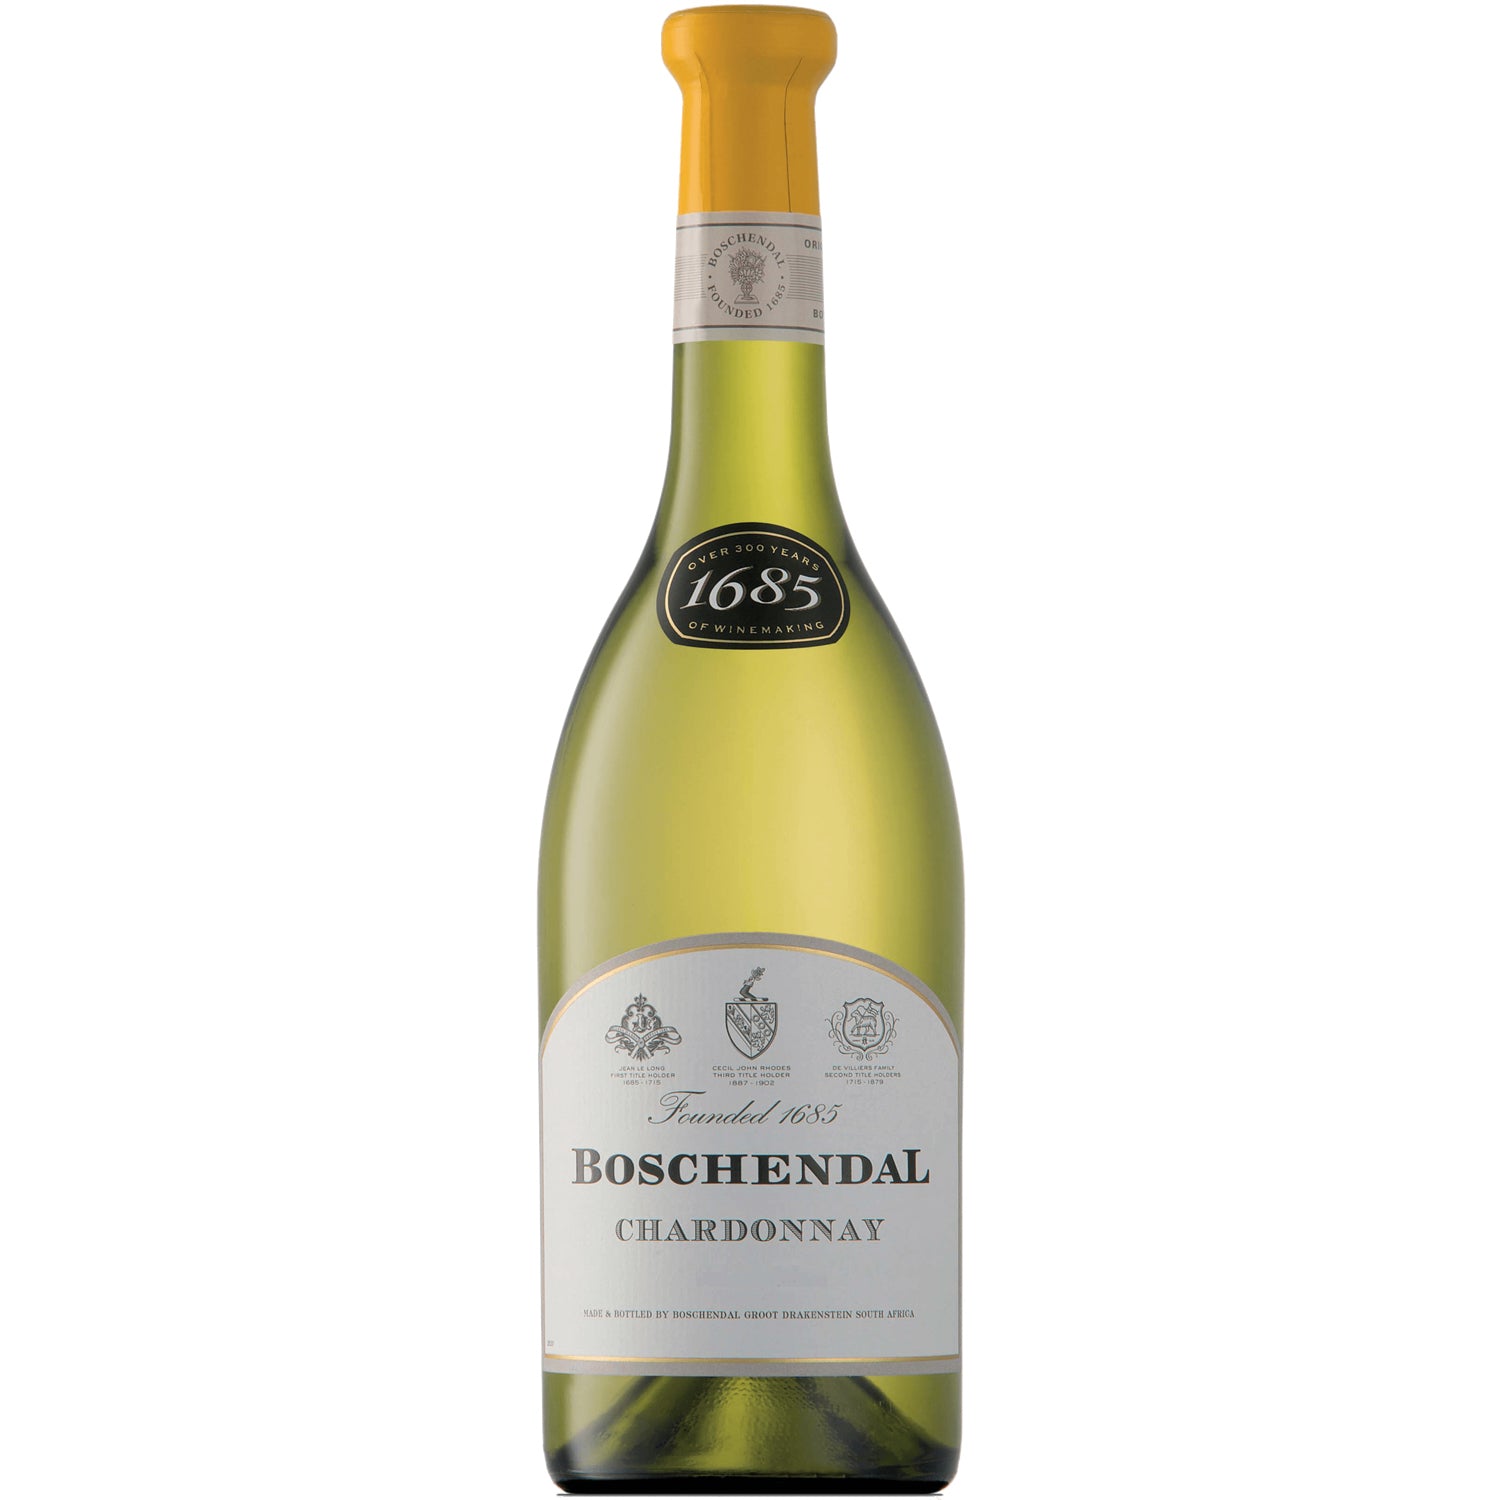 Boschendal 1685 Chardonnay [750ml]